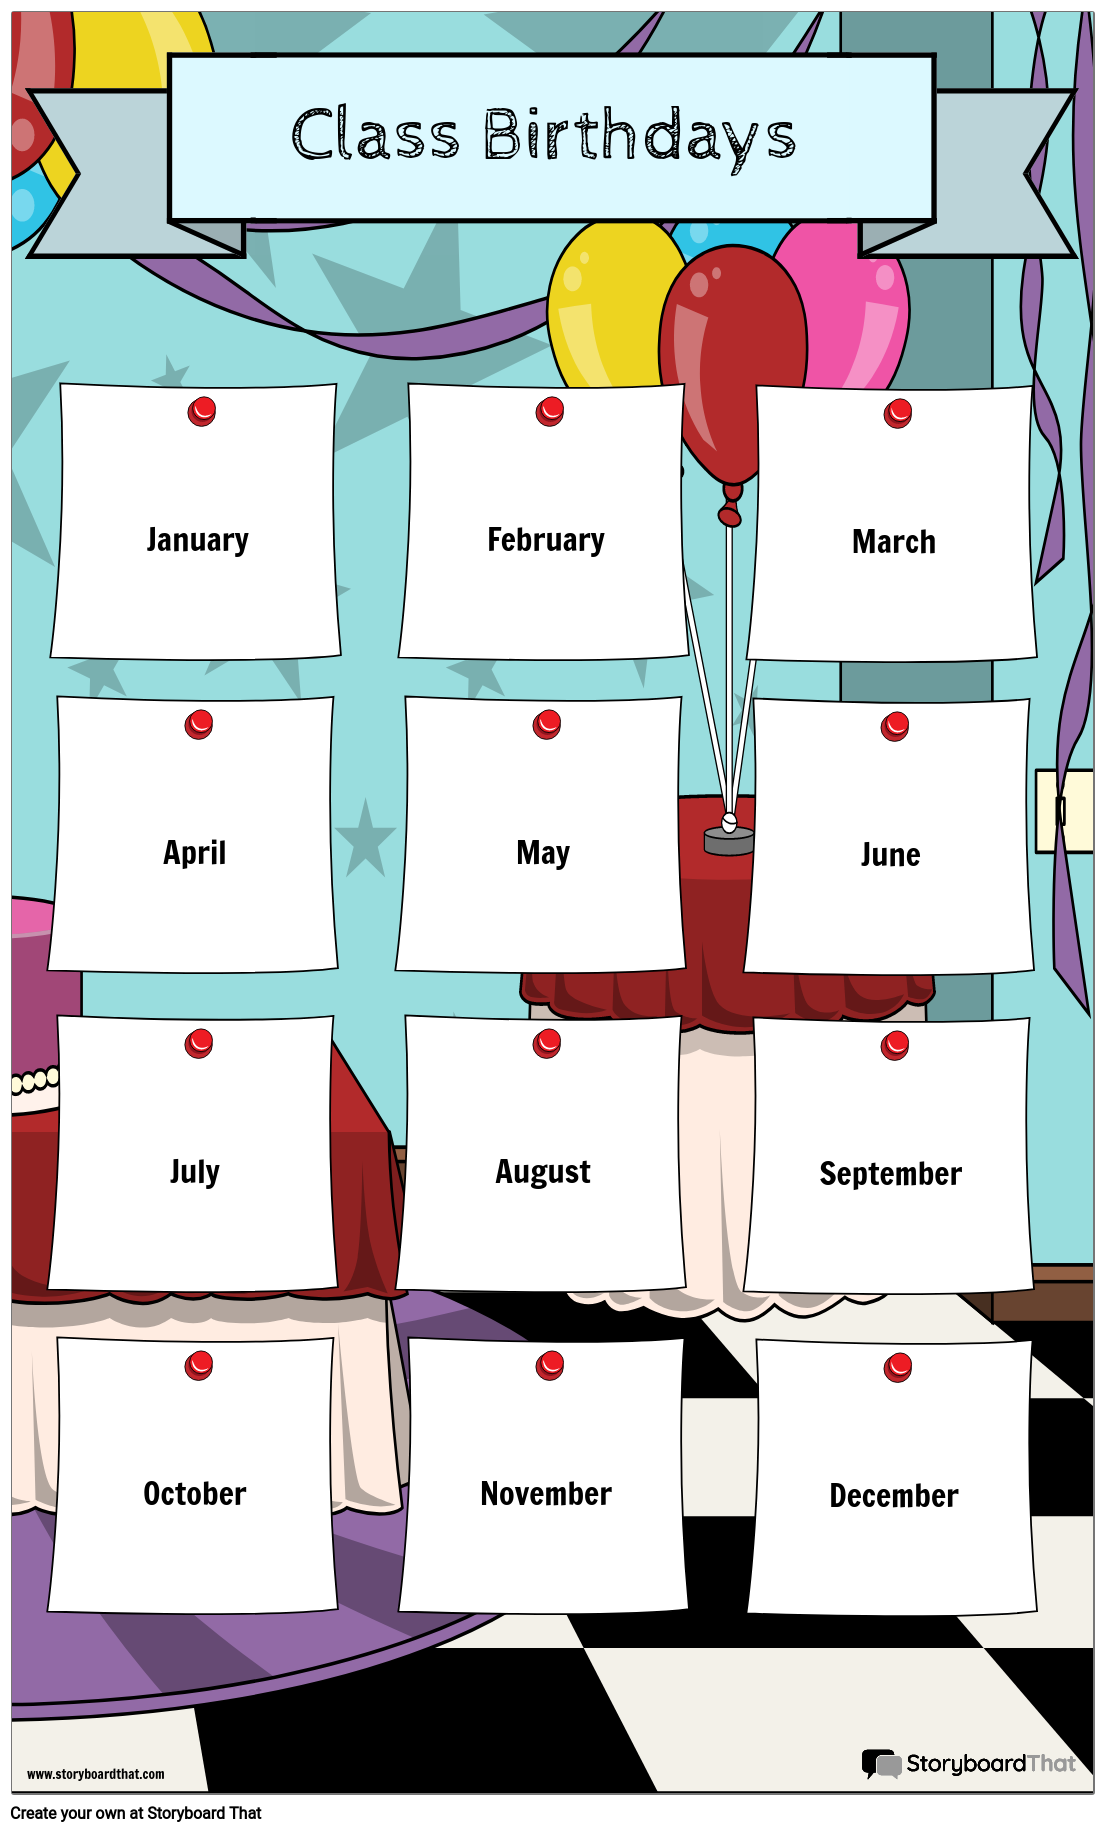 Classroom Birthday Calendar Storyboard by postertemplates